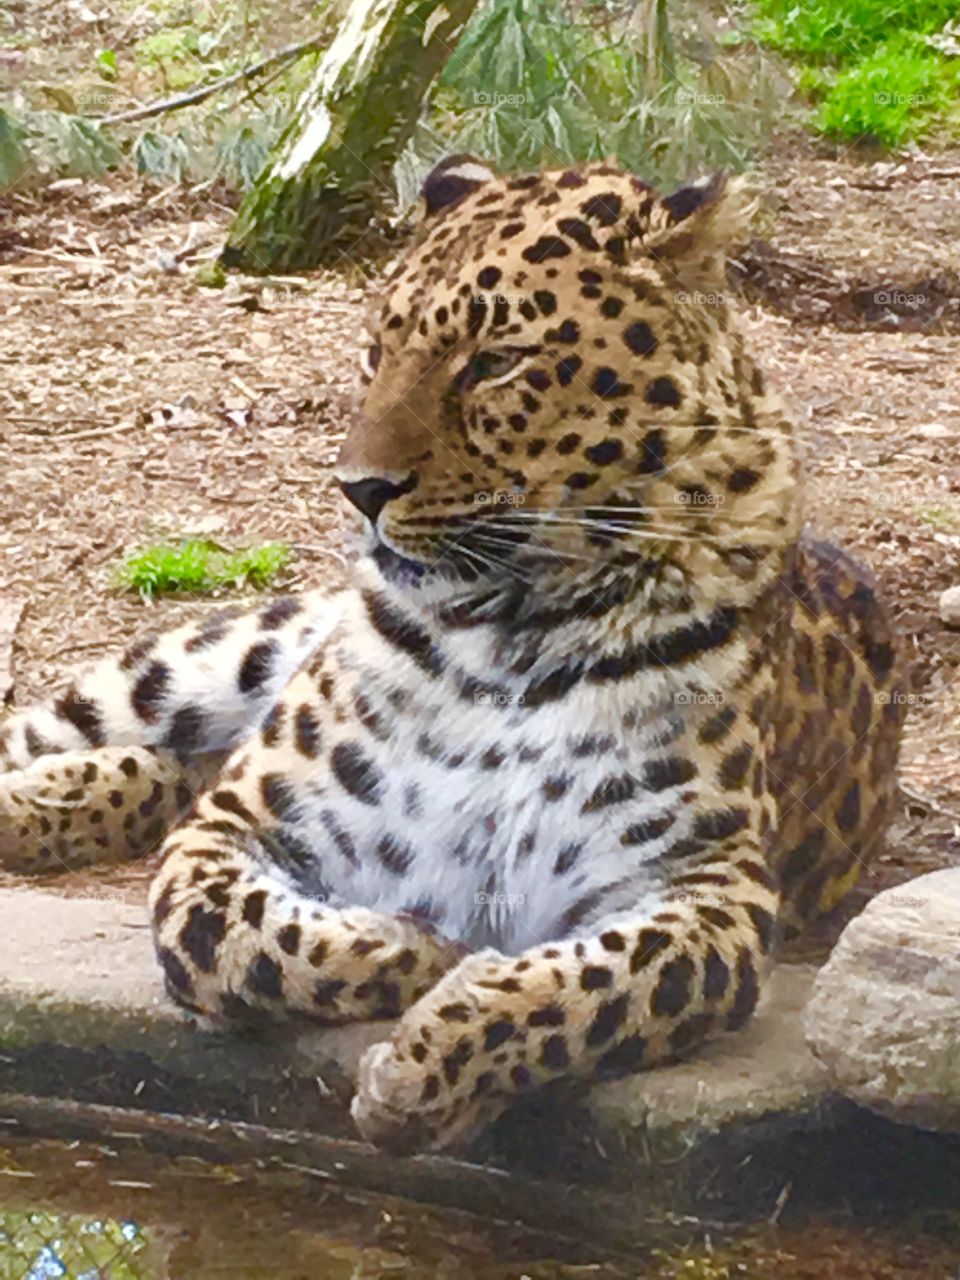 Rare Amur leopard lounging in enclosure at Beardsley Zoo, Bridgeport, CT